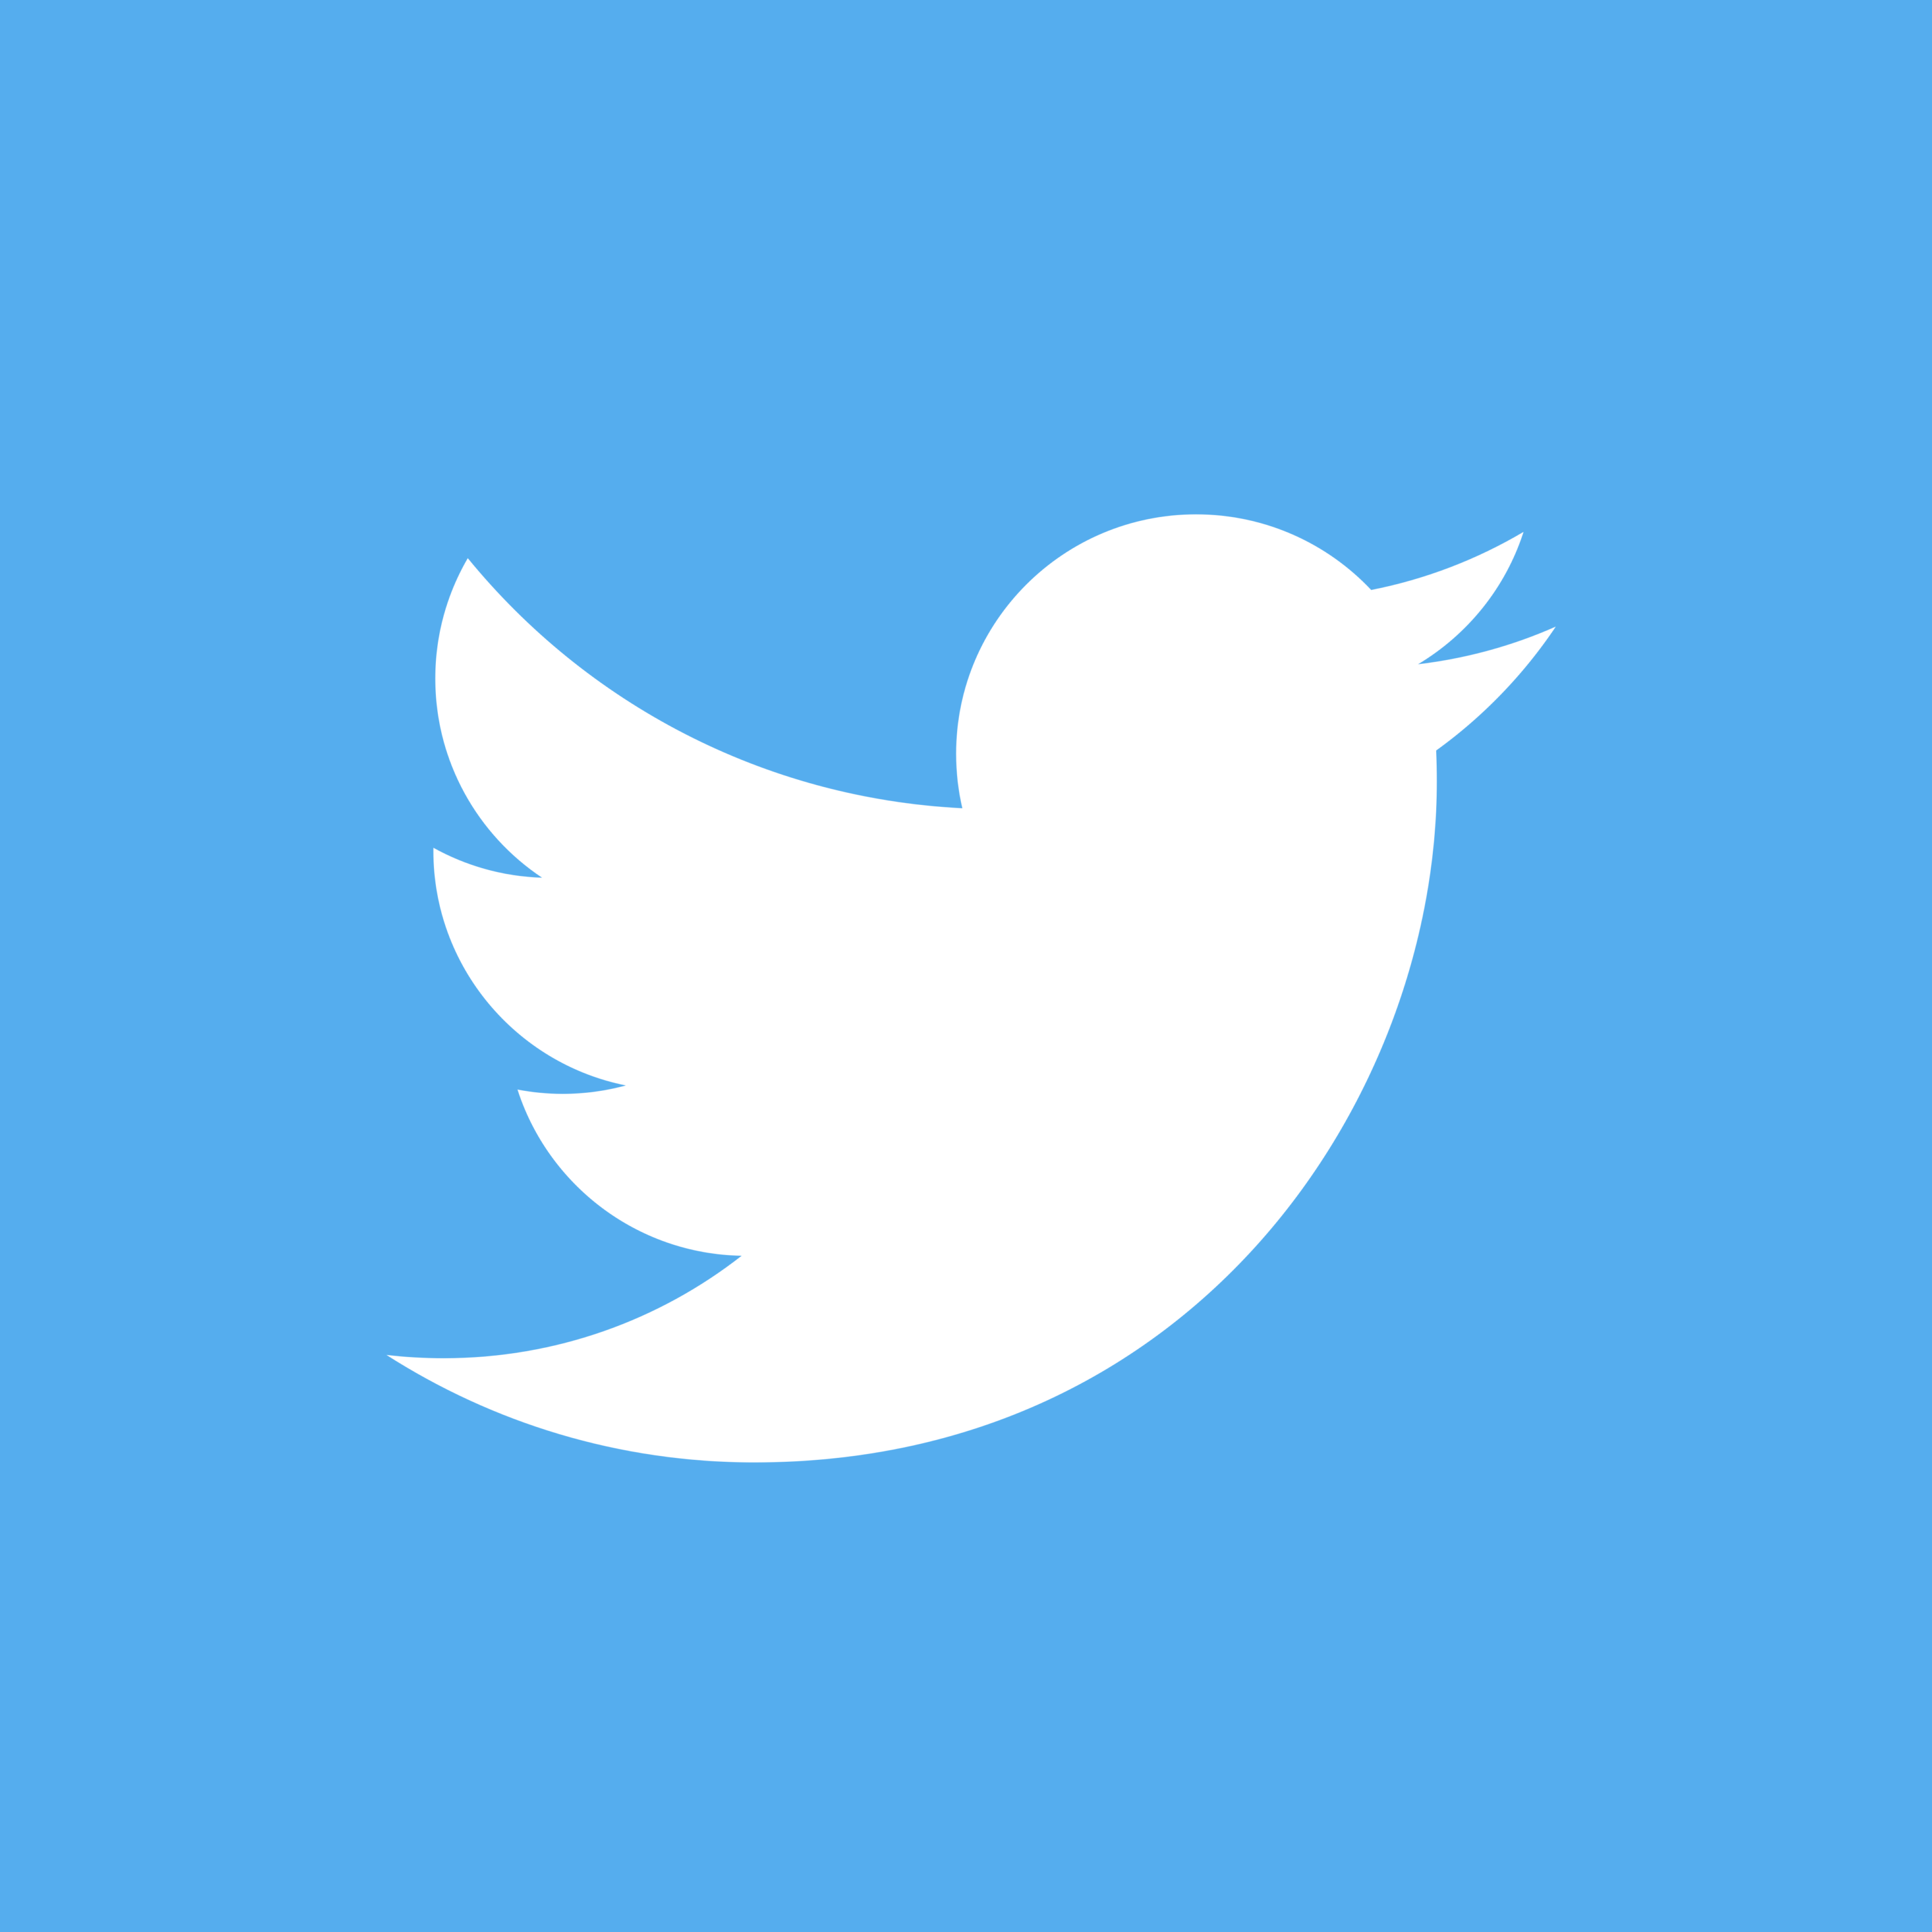 Twitter app icon Logo 2012